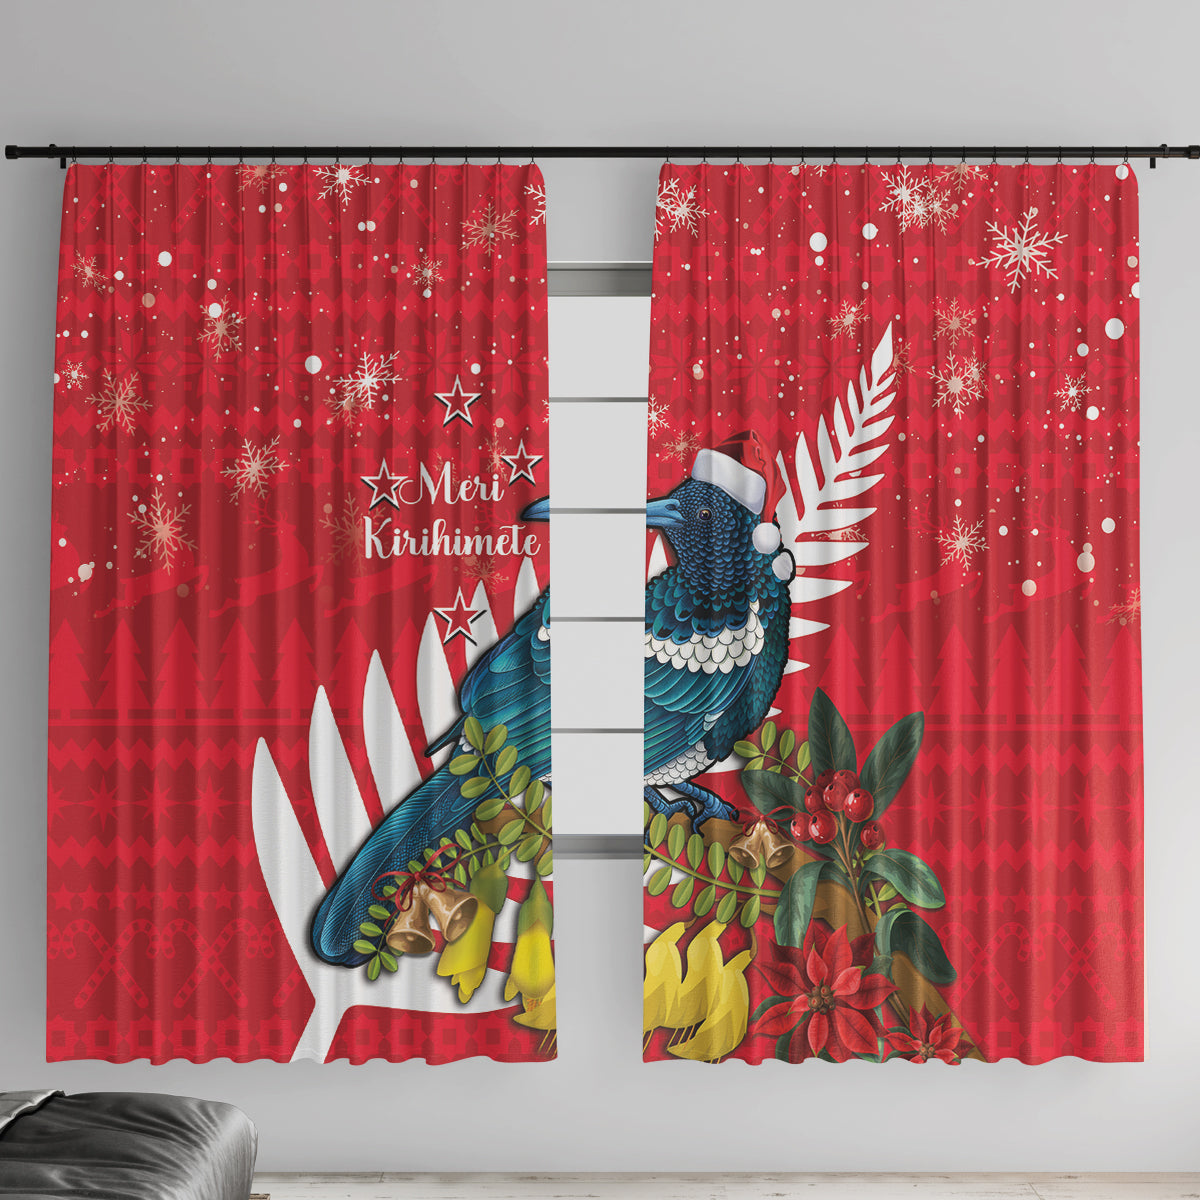 New Zealand Christmas In July Window Curtain Tui Bird With Kowhai Meri Kirihimete